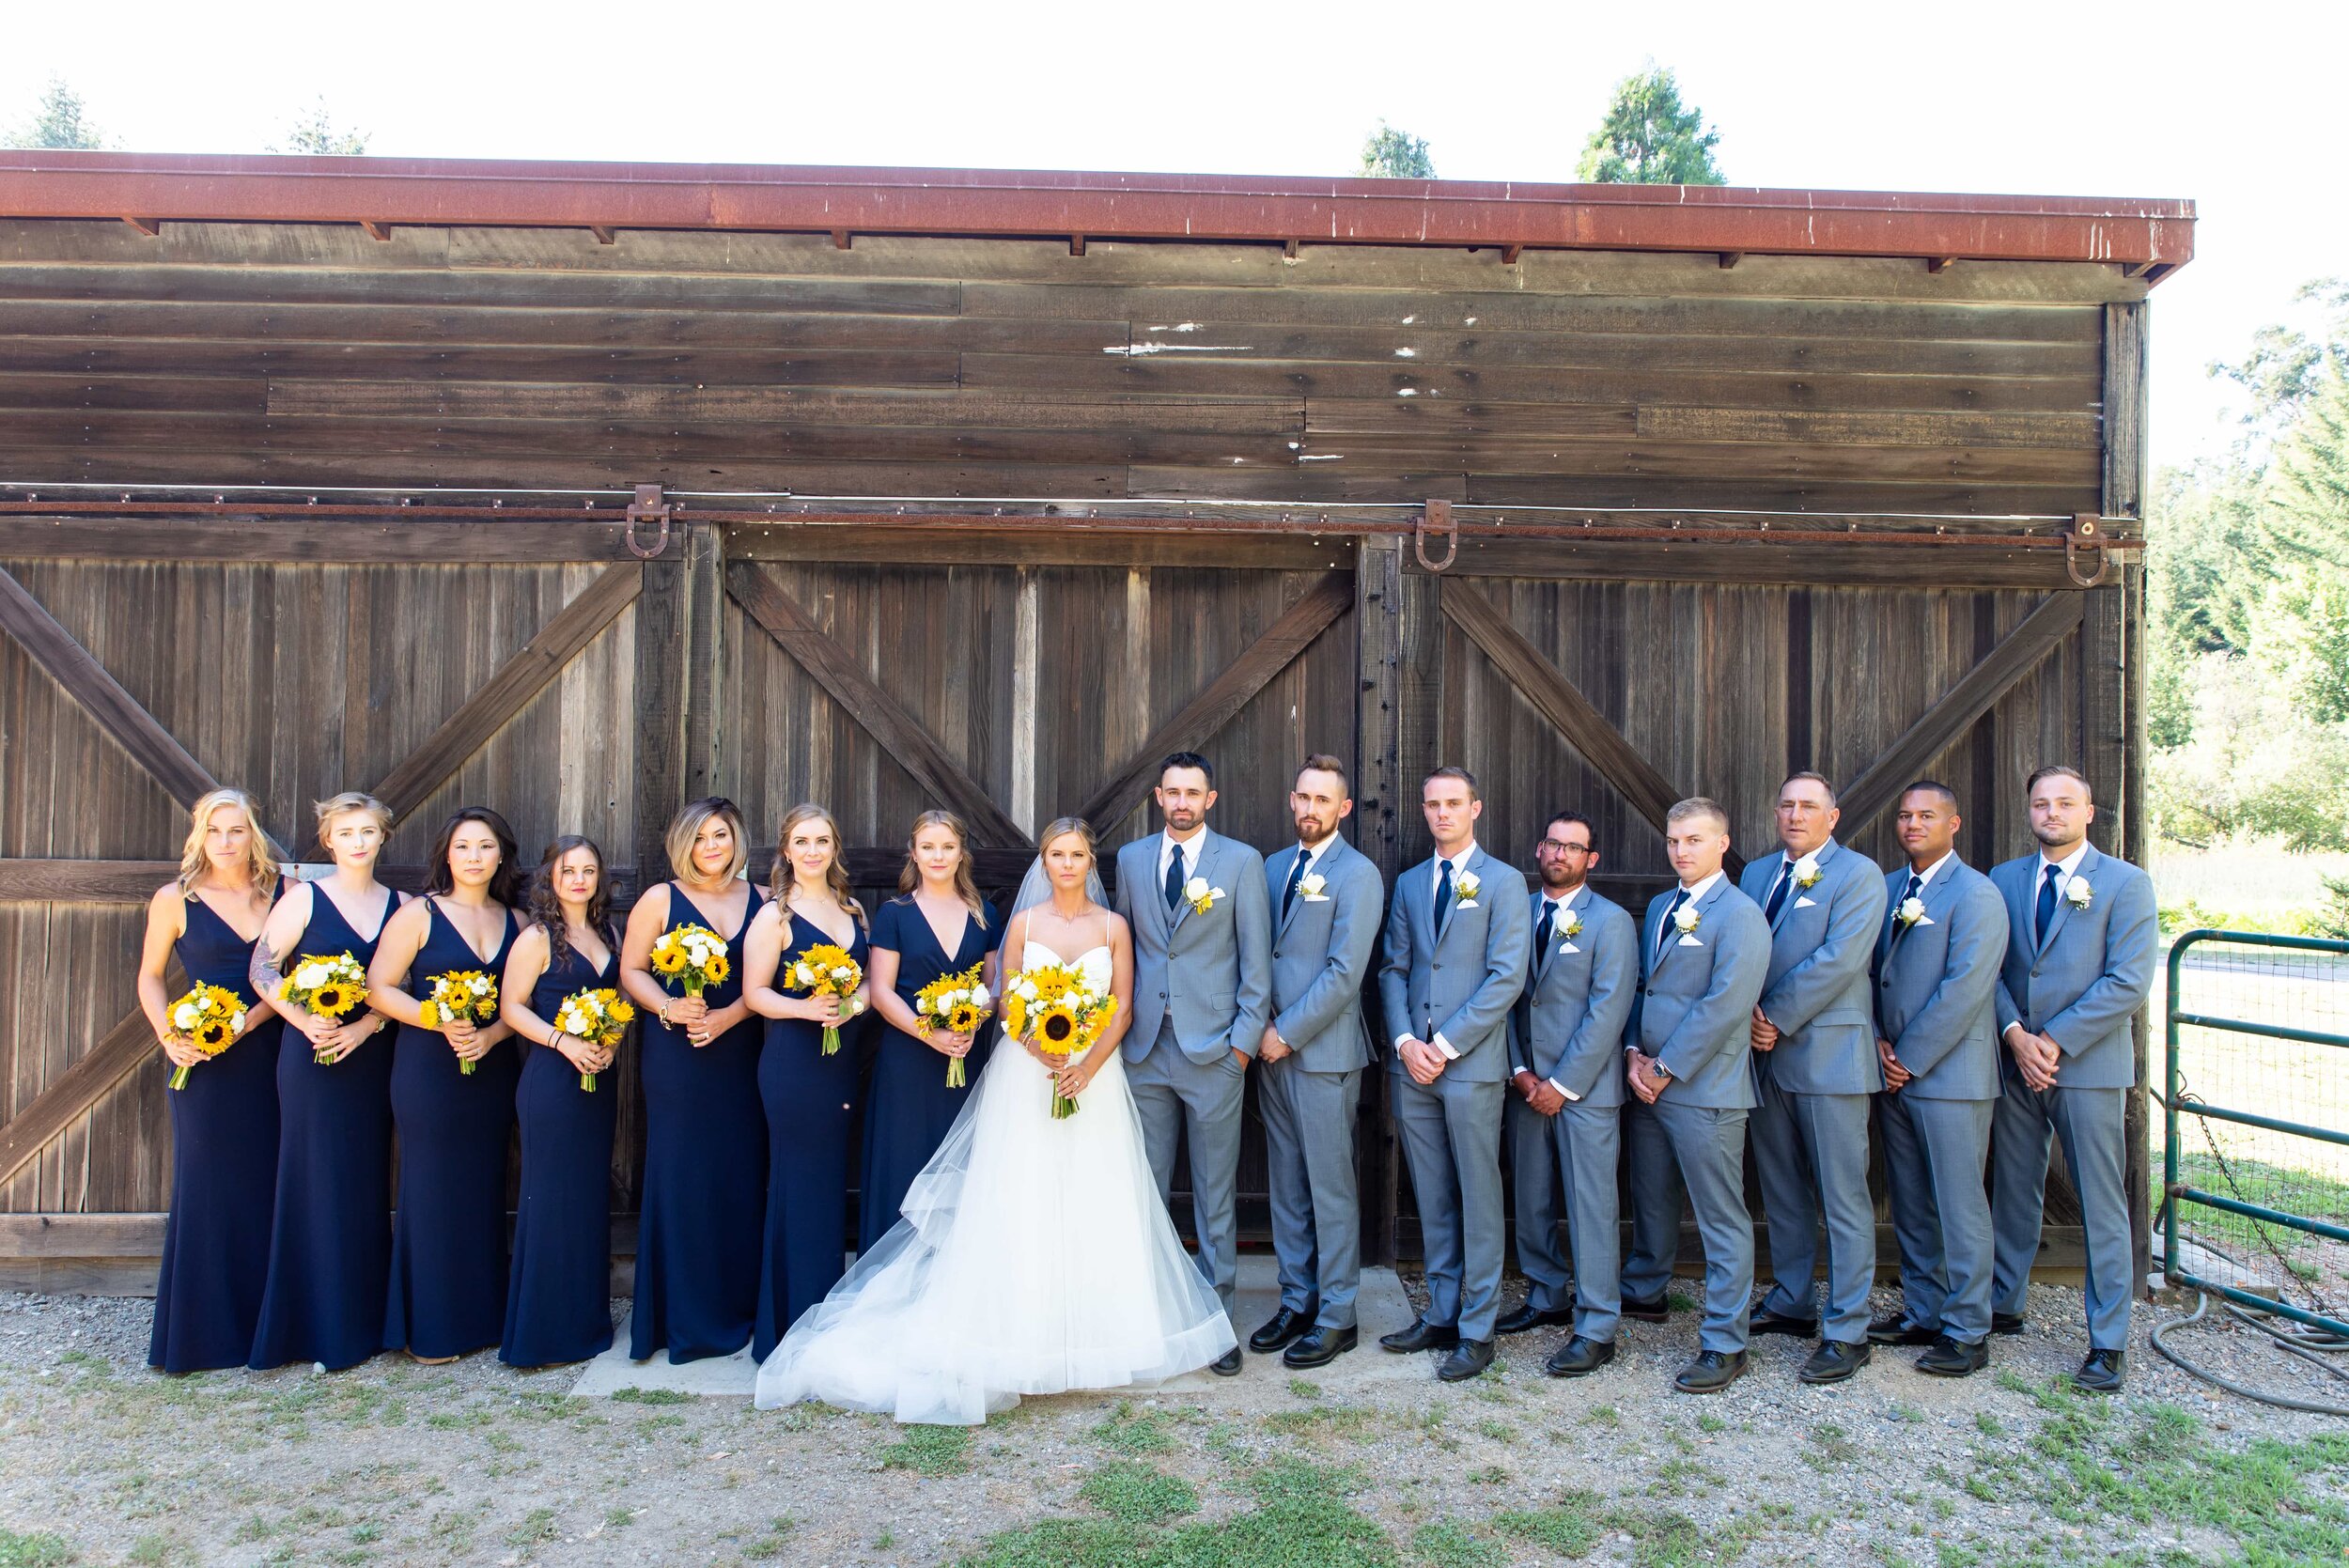 Rustic barn wedding party photo